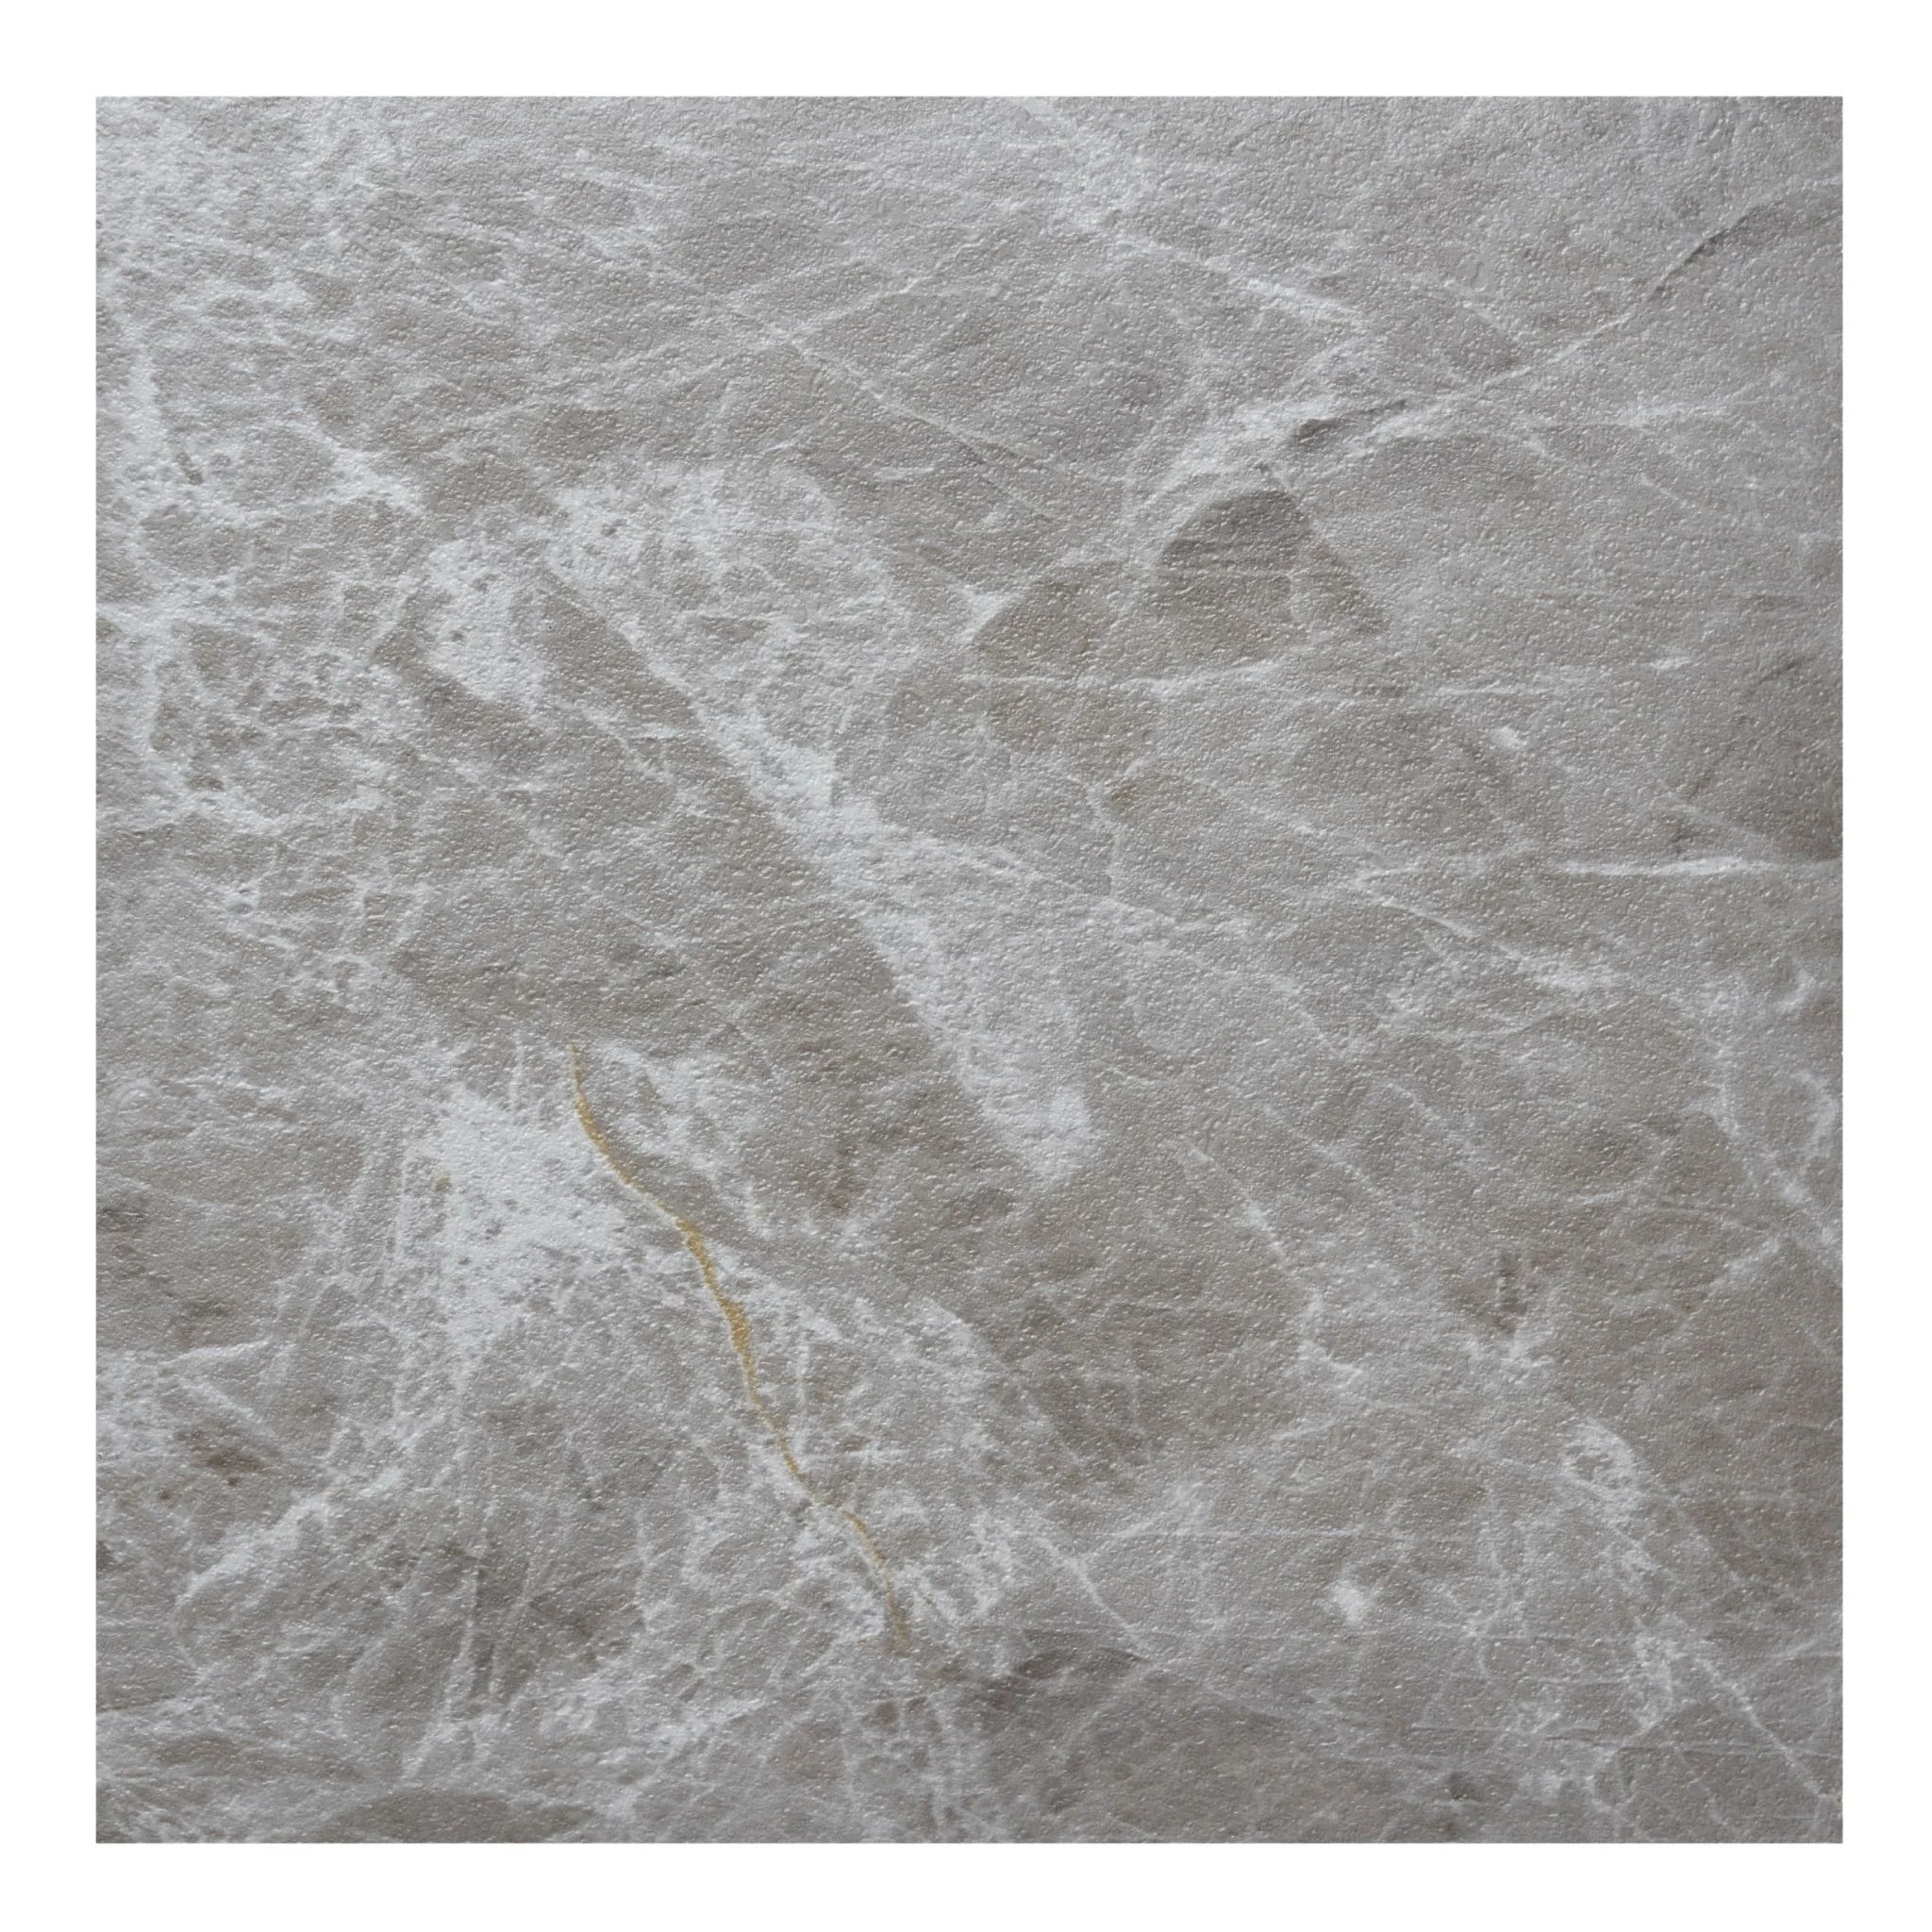 detailed view of light grey tile-effect concrete flooring with subtle grain patterns